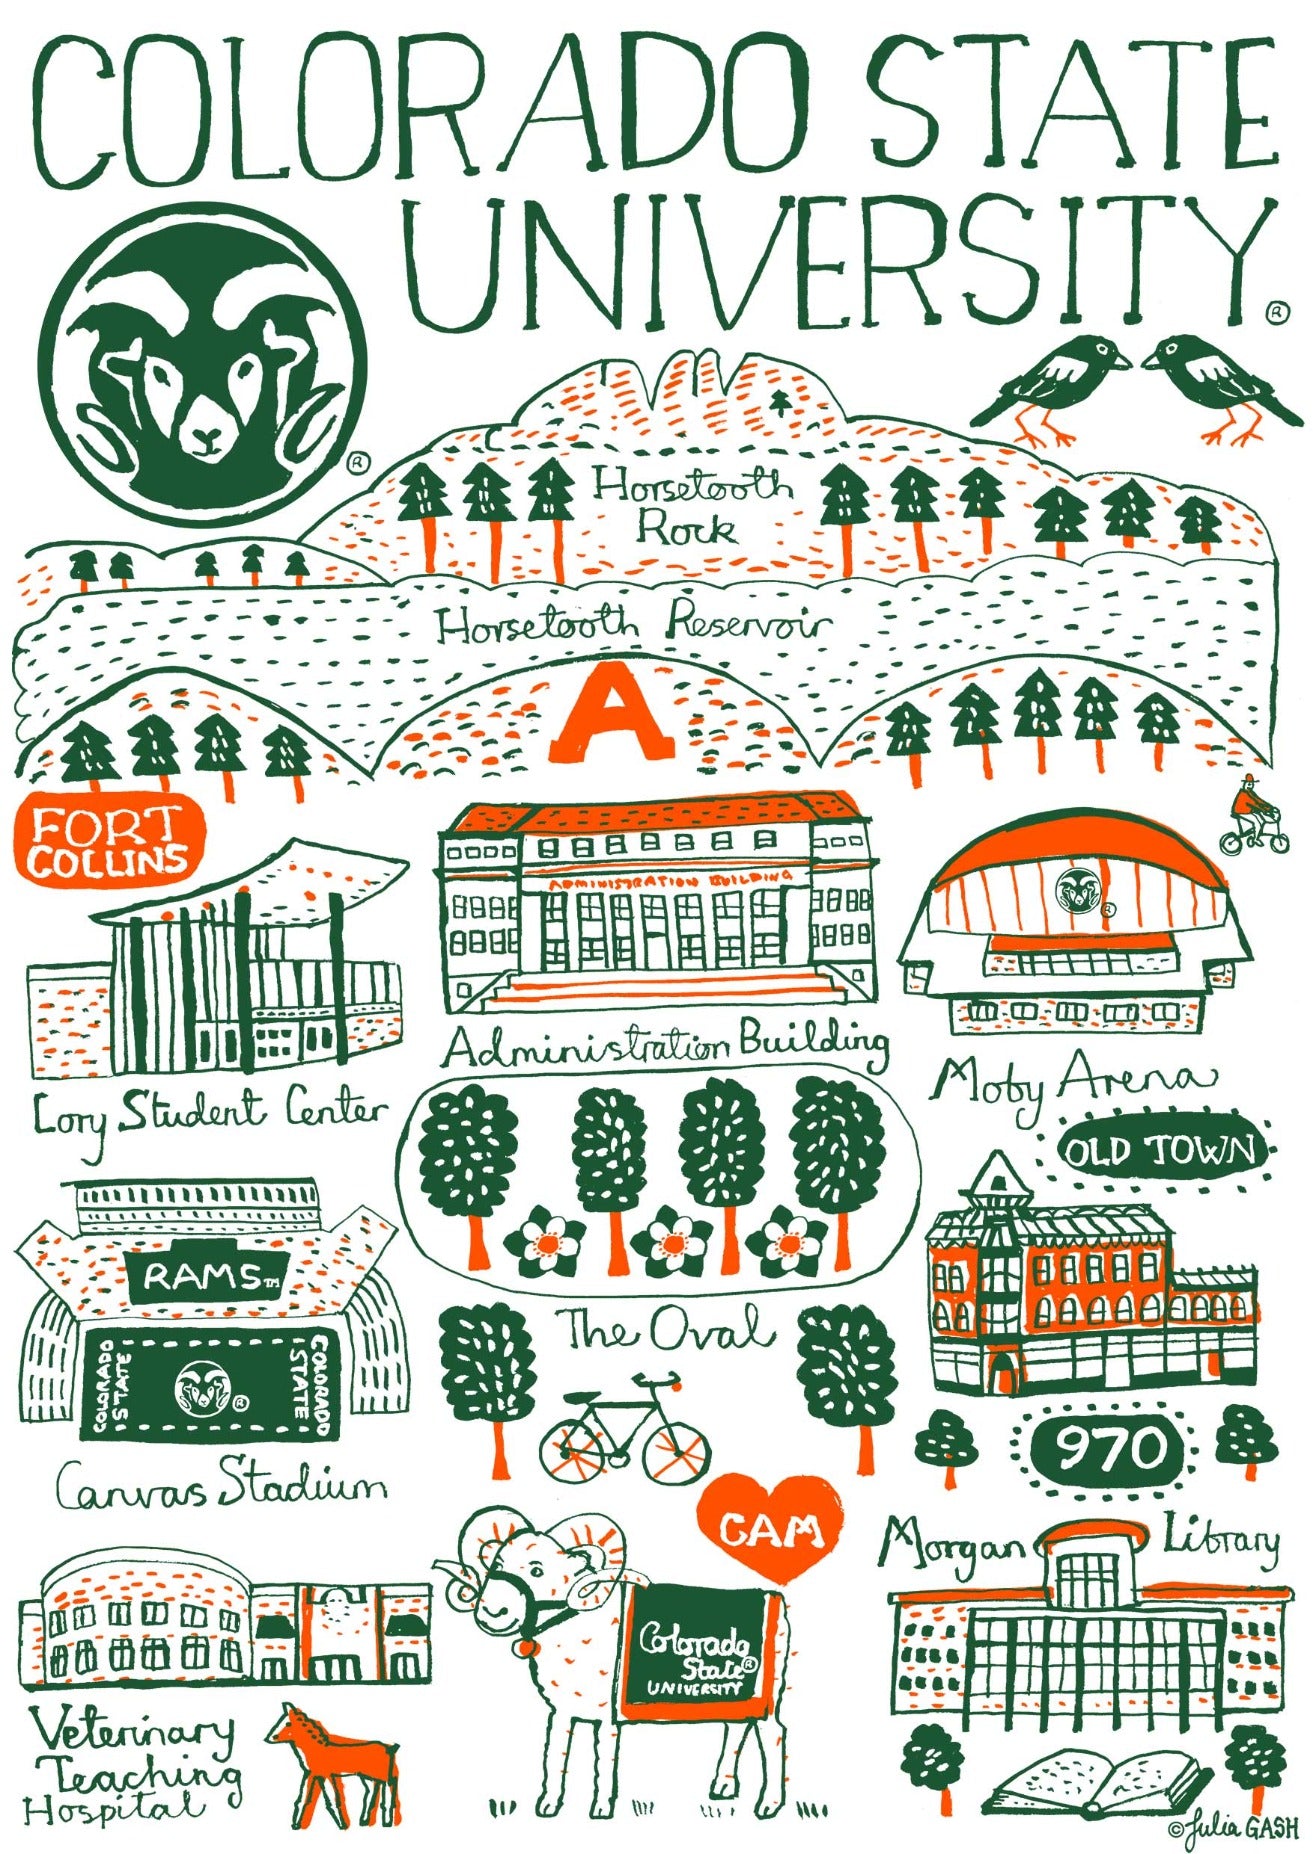 Colorado State University by Julia Gash